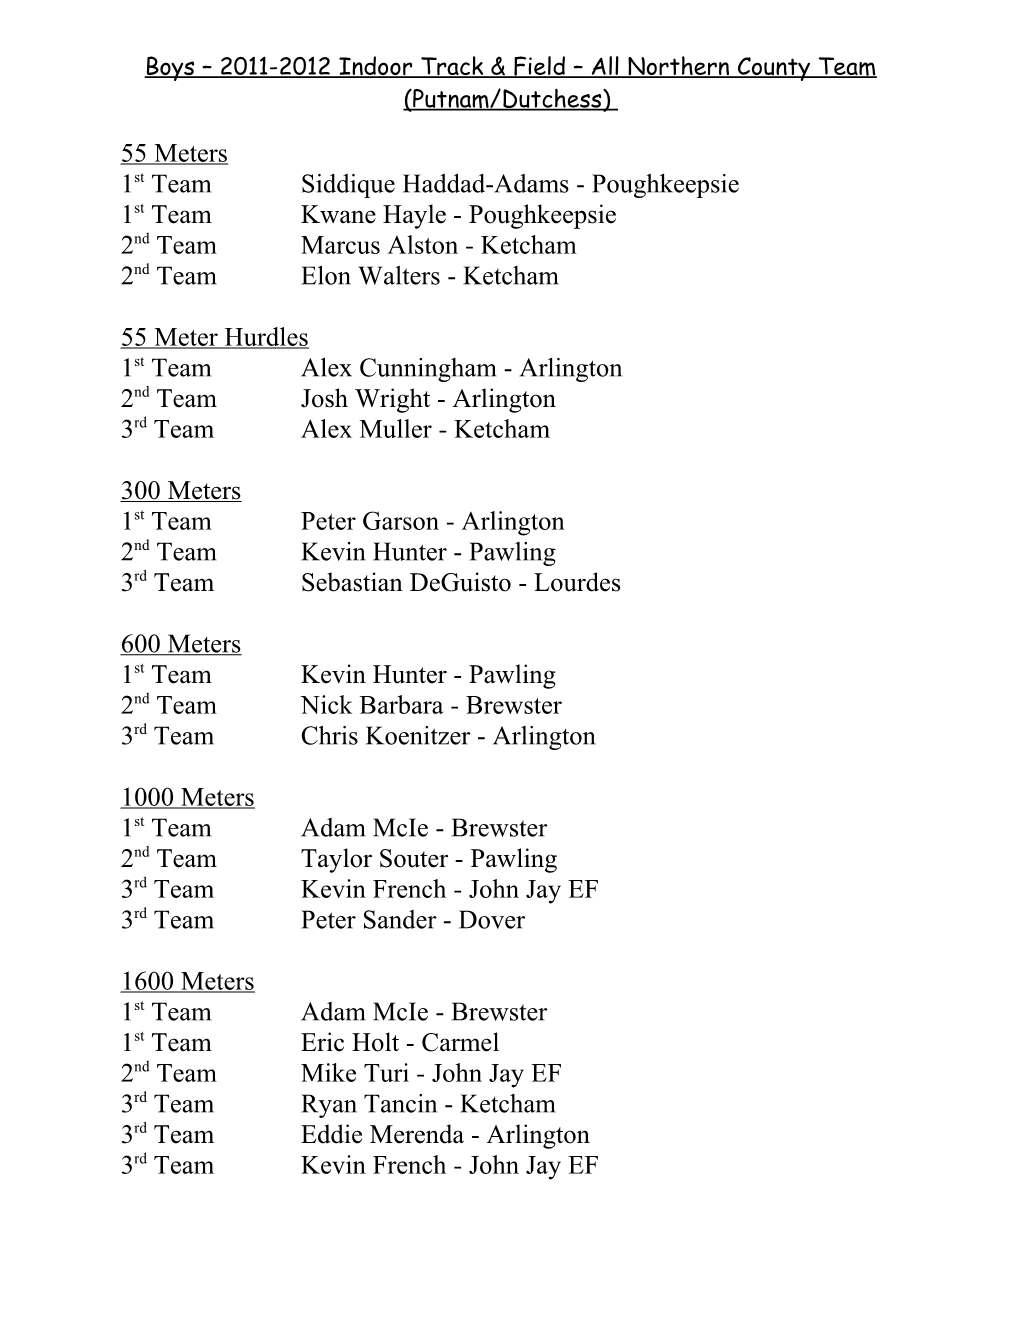 Boys 2011-2012 Indoor Track & Field All Northern County Team (Putnam/Dutchess)